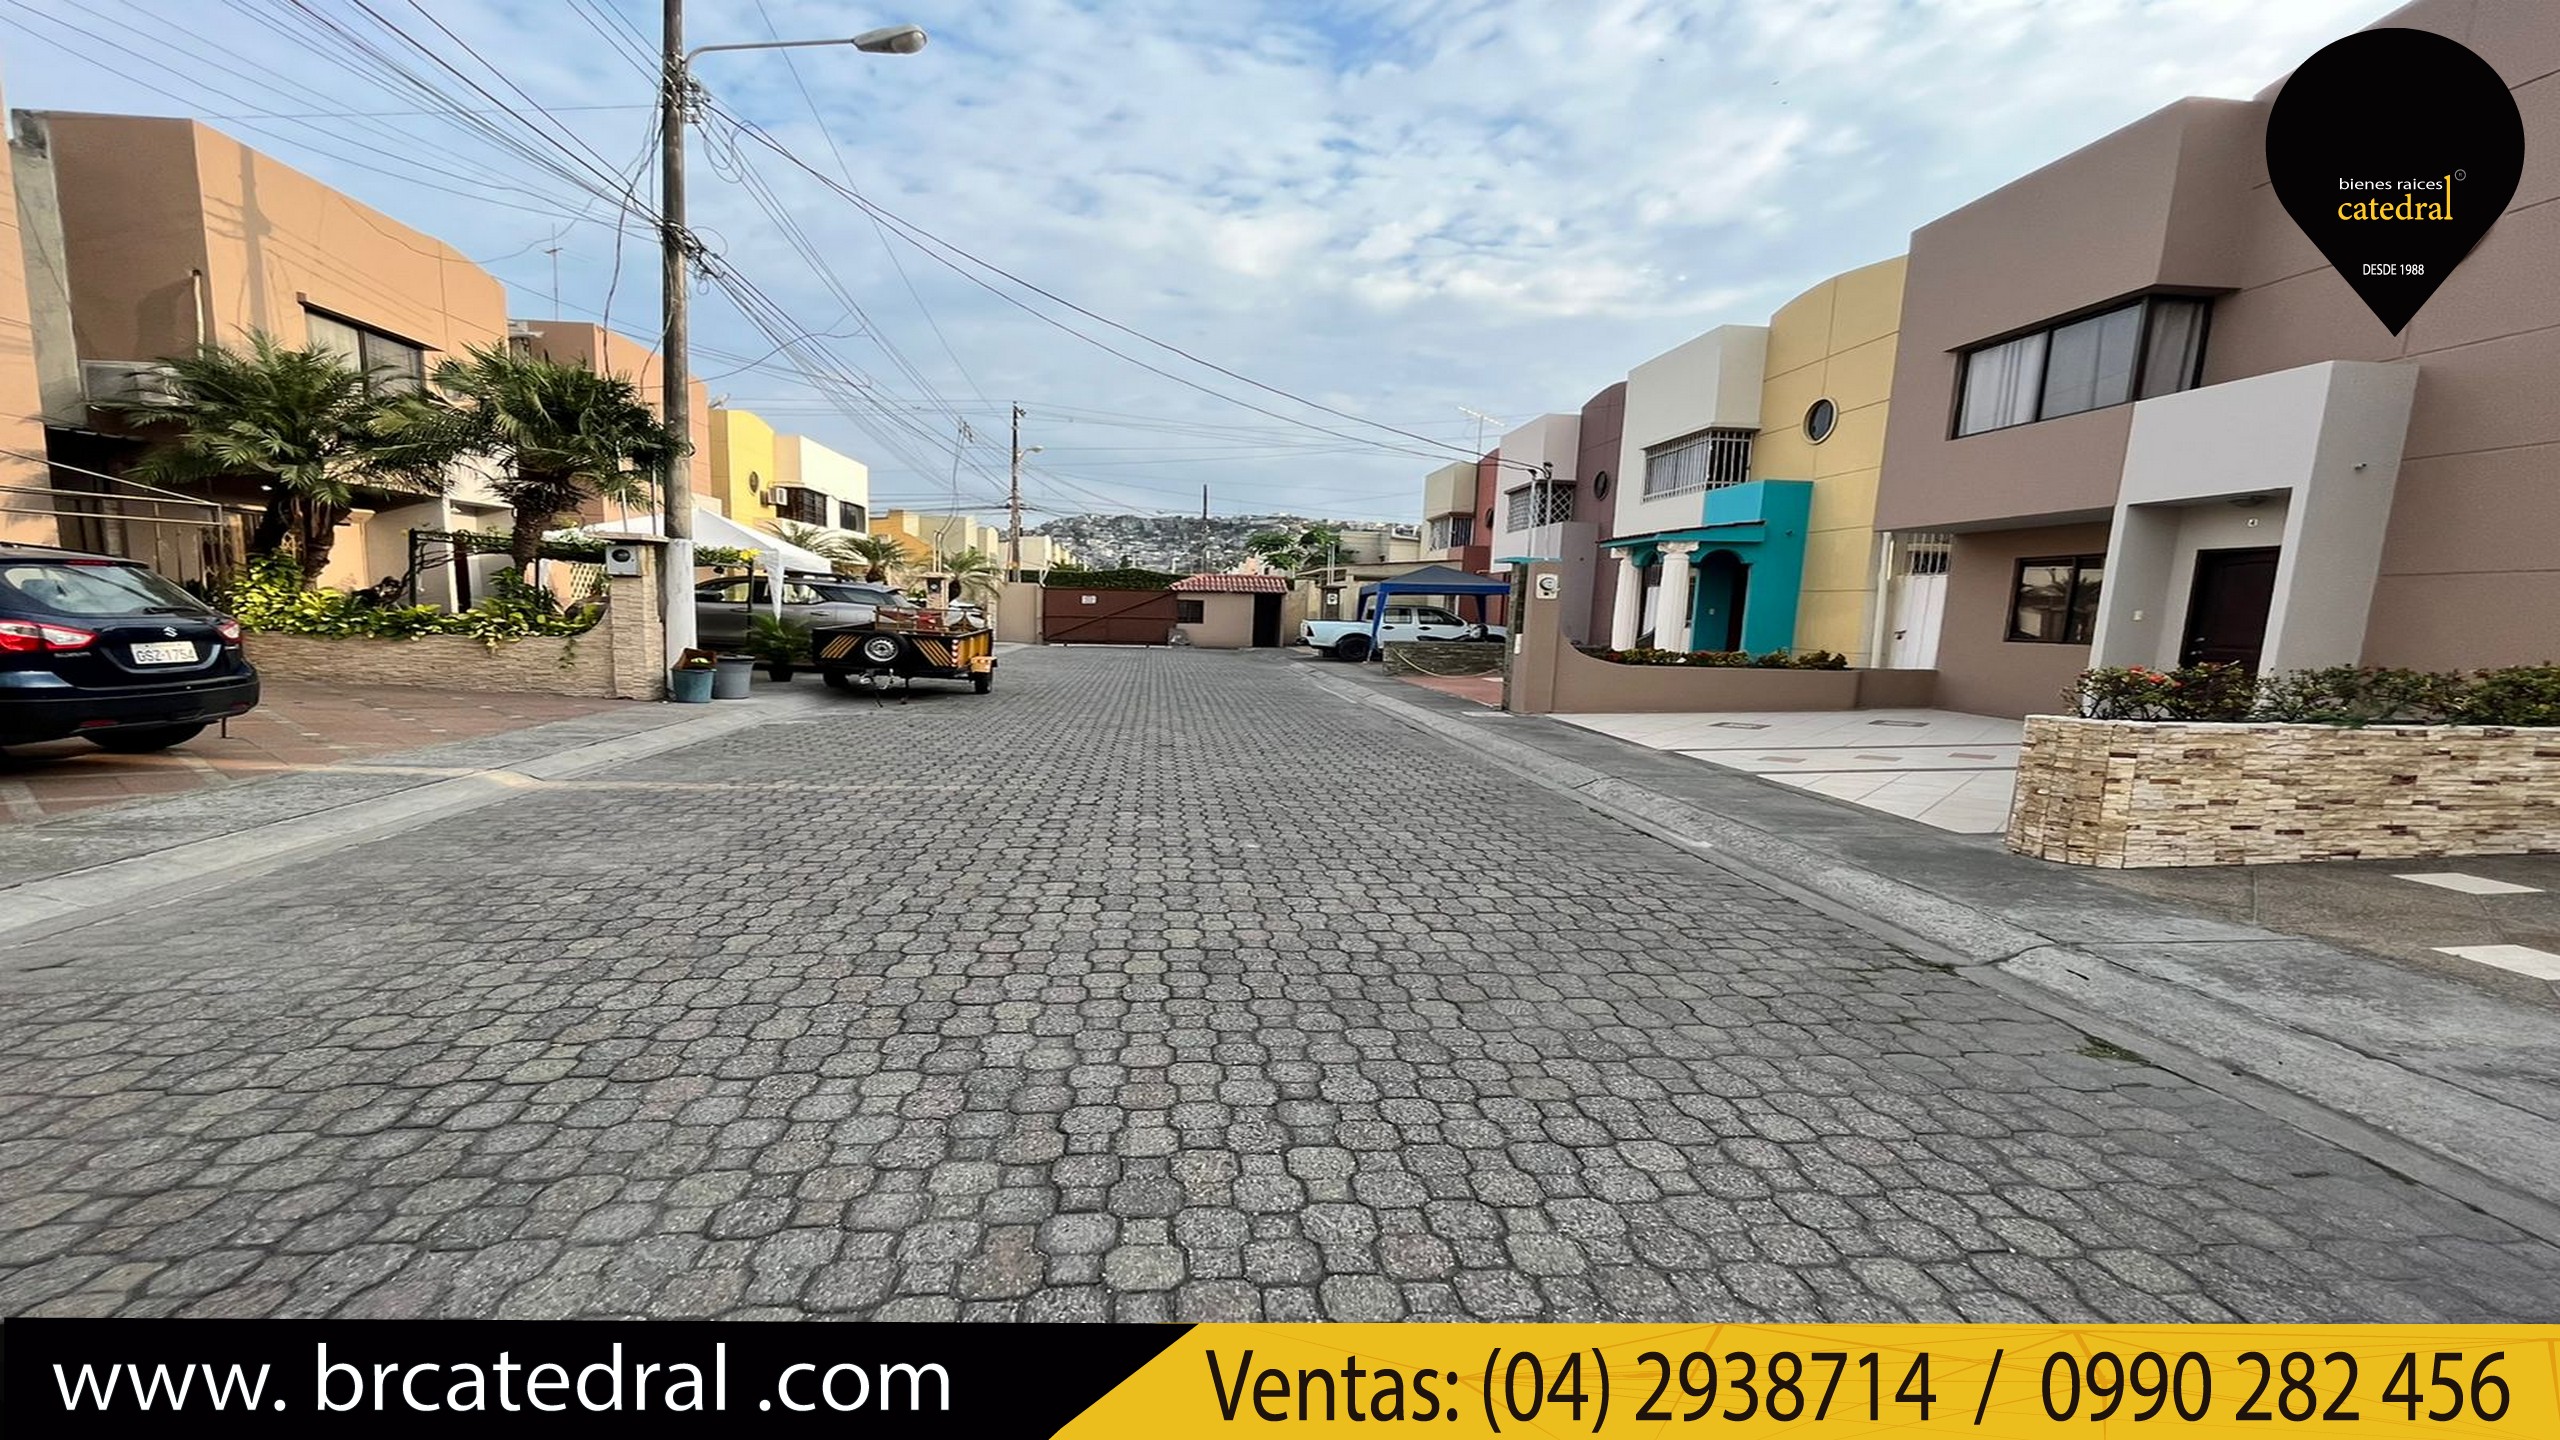 Villa Casa de Venta en Guayaquil Ecuador sector Urb. San Felipe 